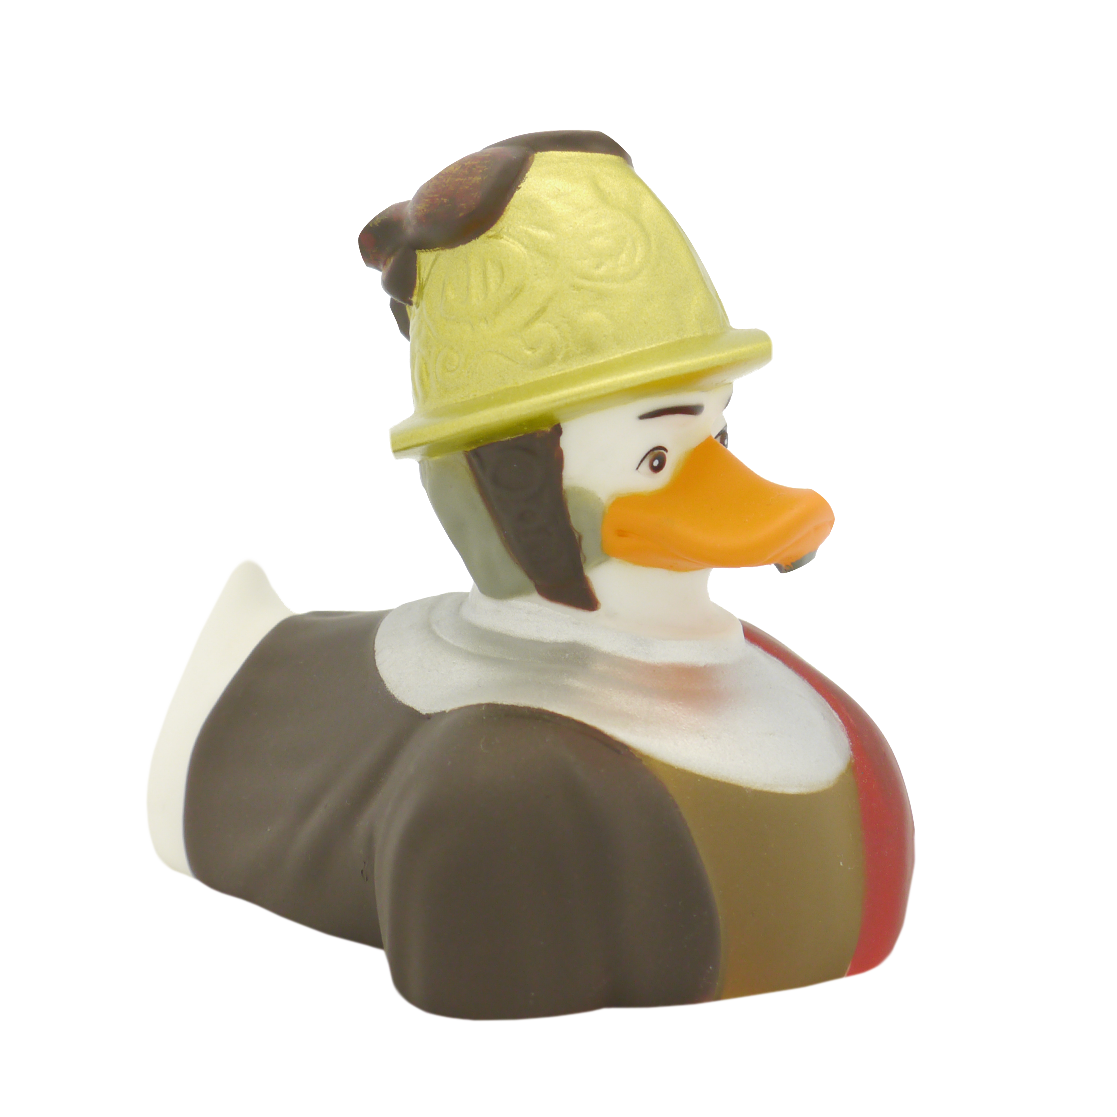 Duck mand med guld hjelm